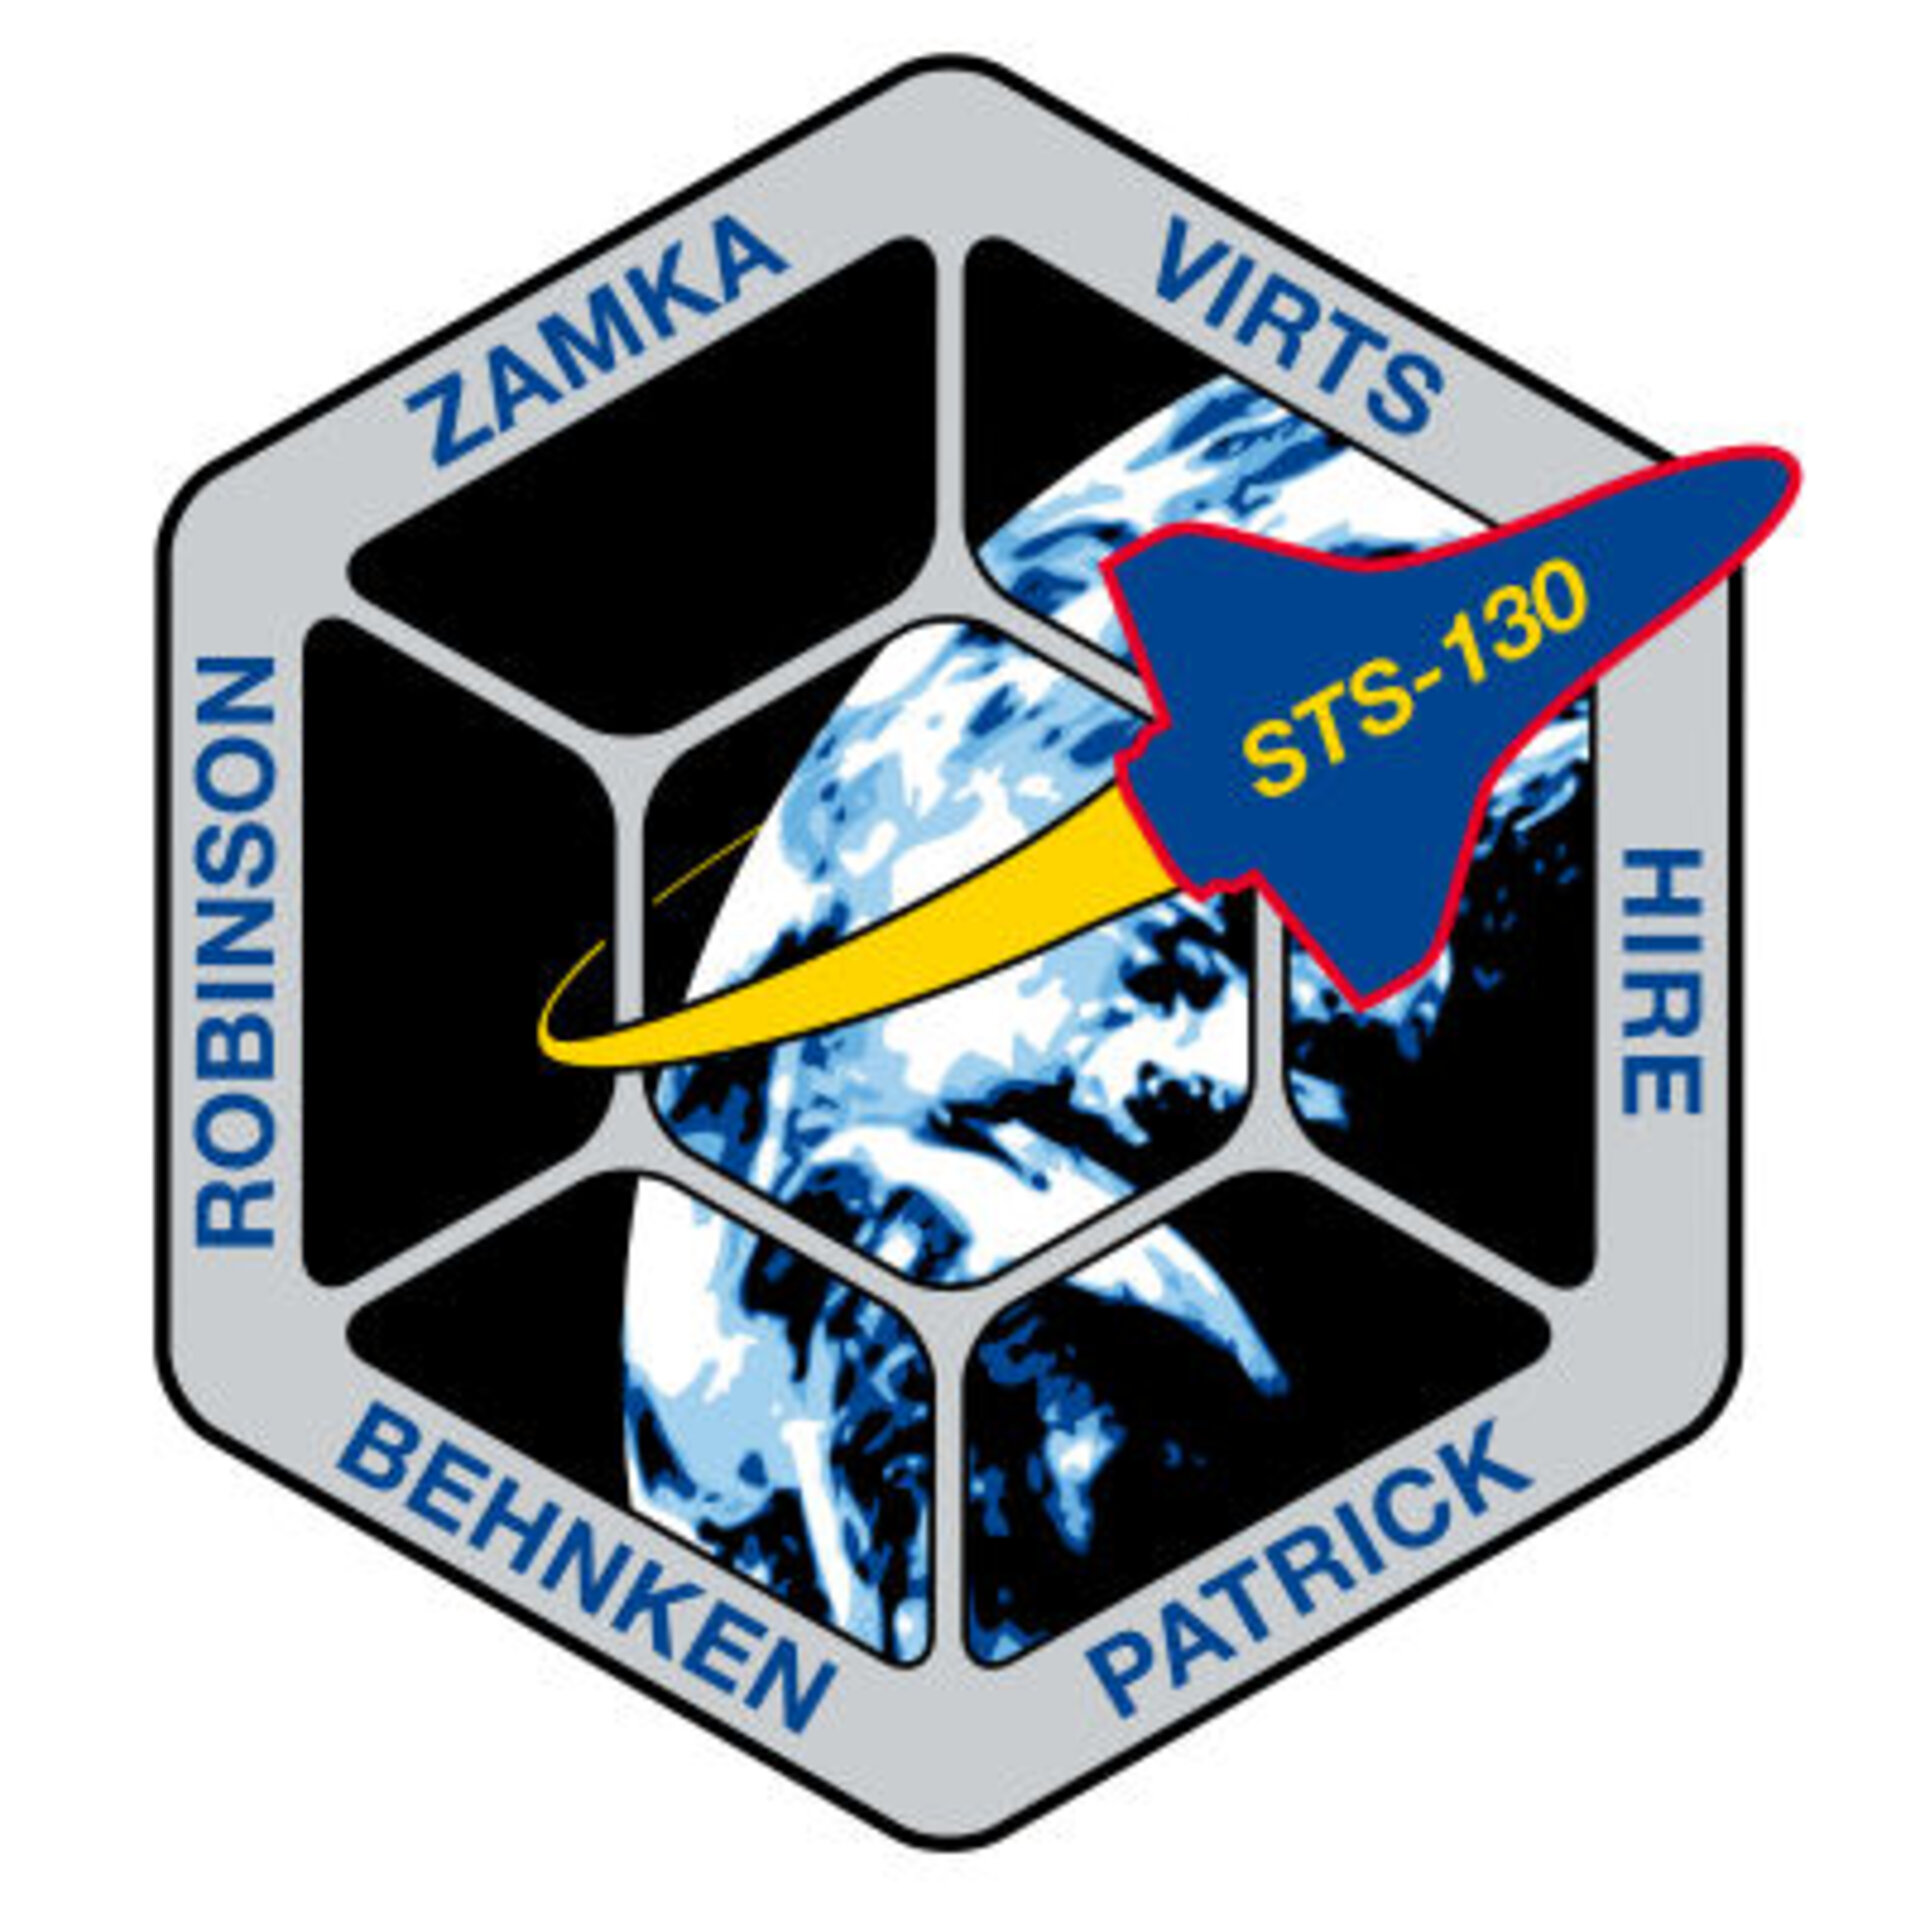 STS-130 mission logo